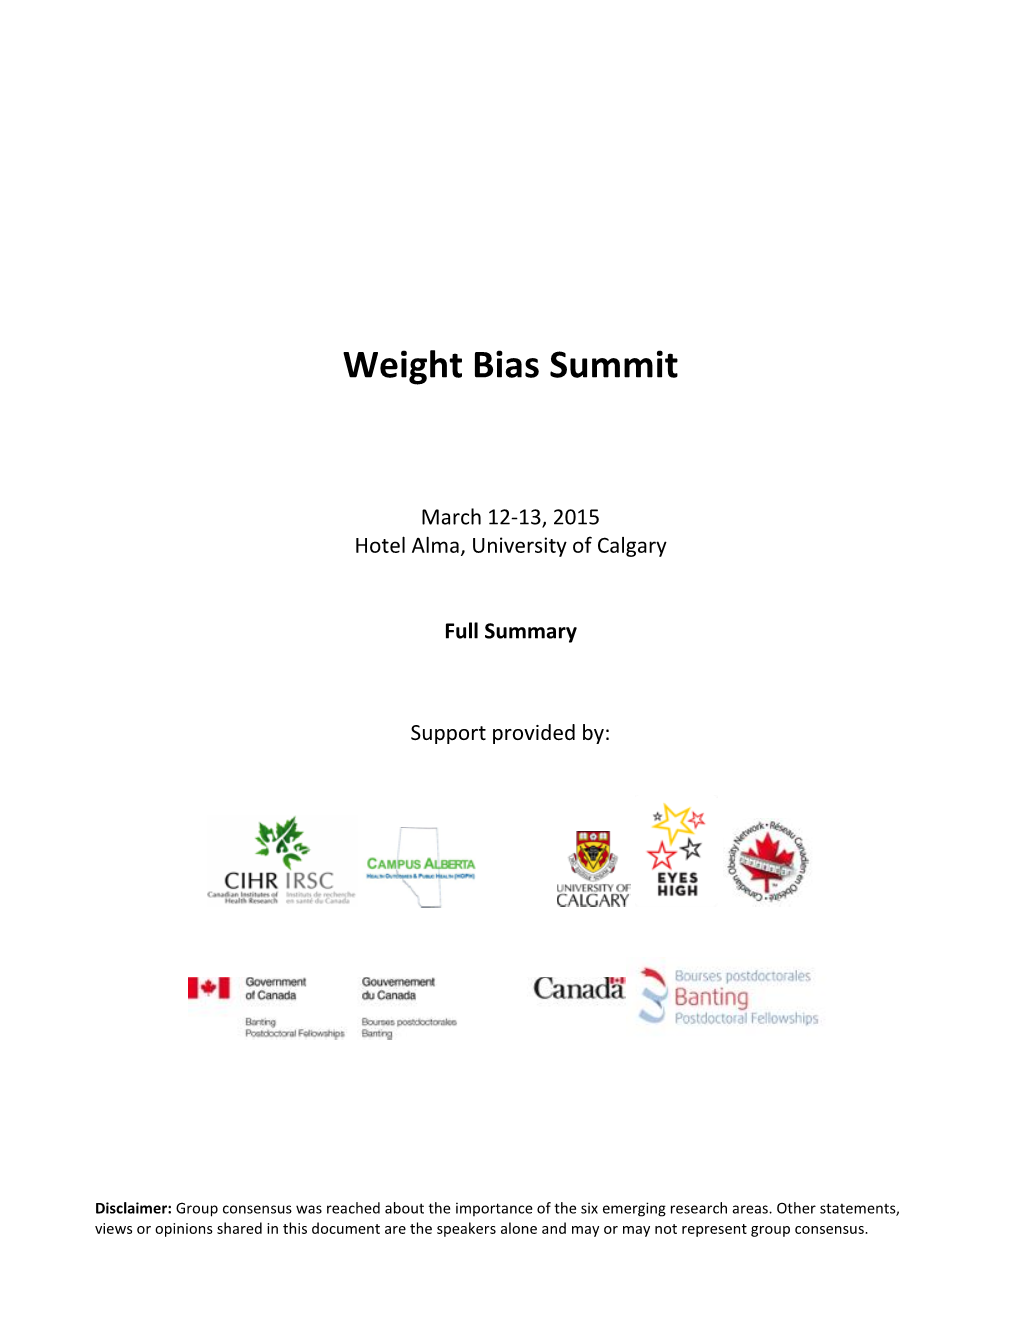 Weight Bias Summit Full Summary 2015